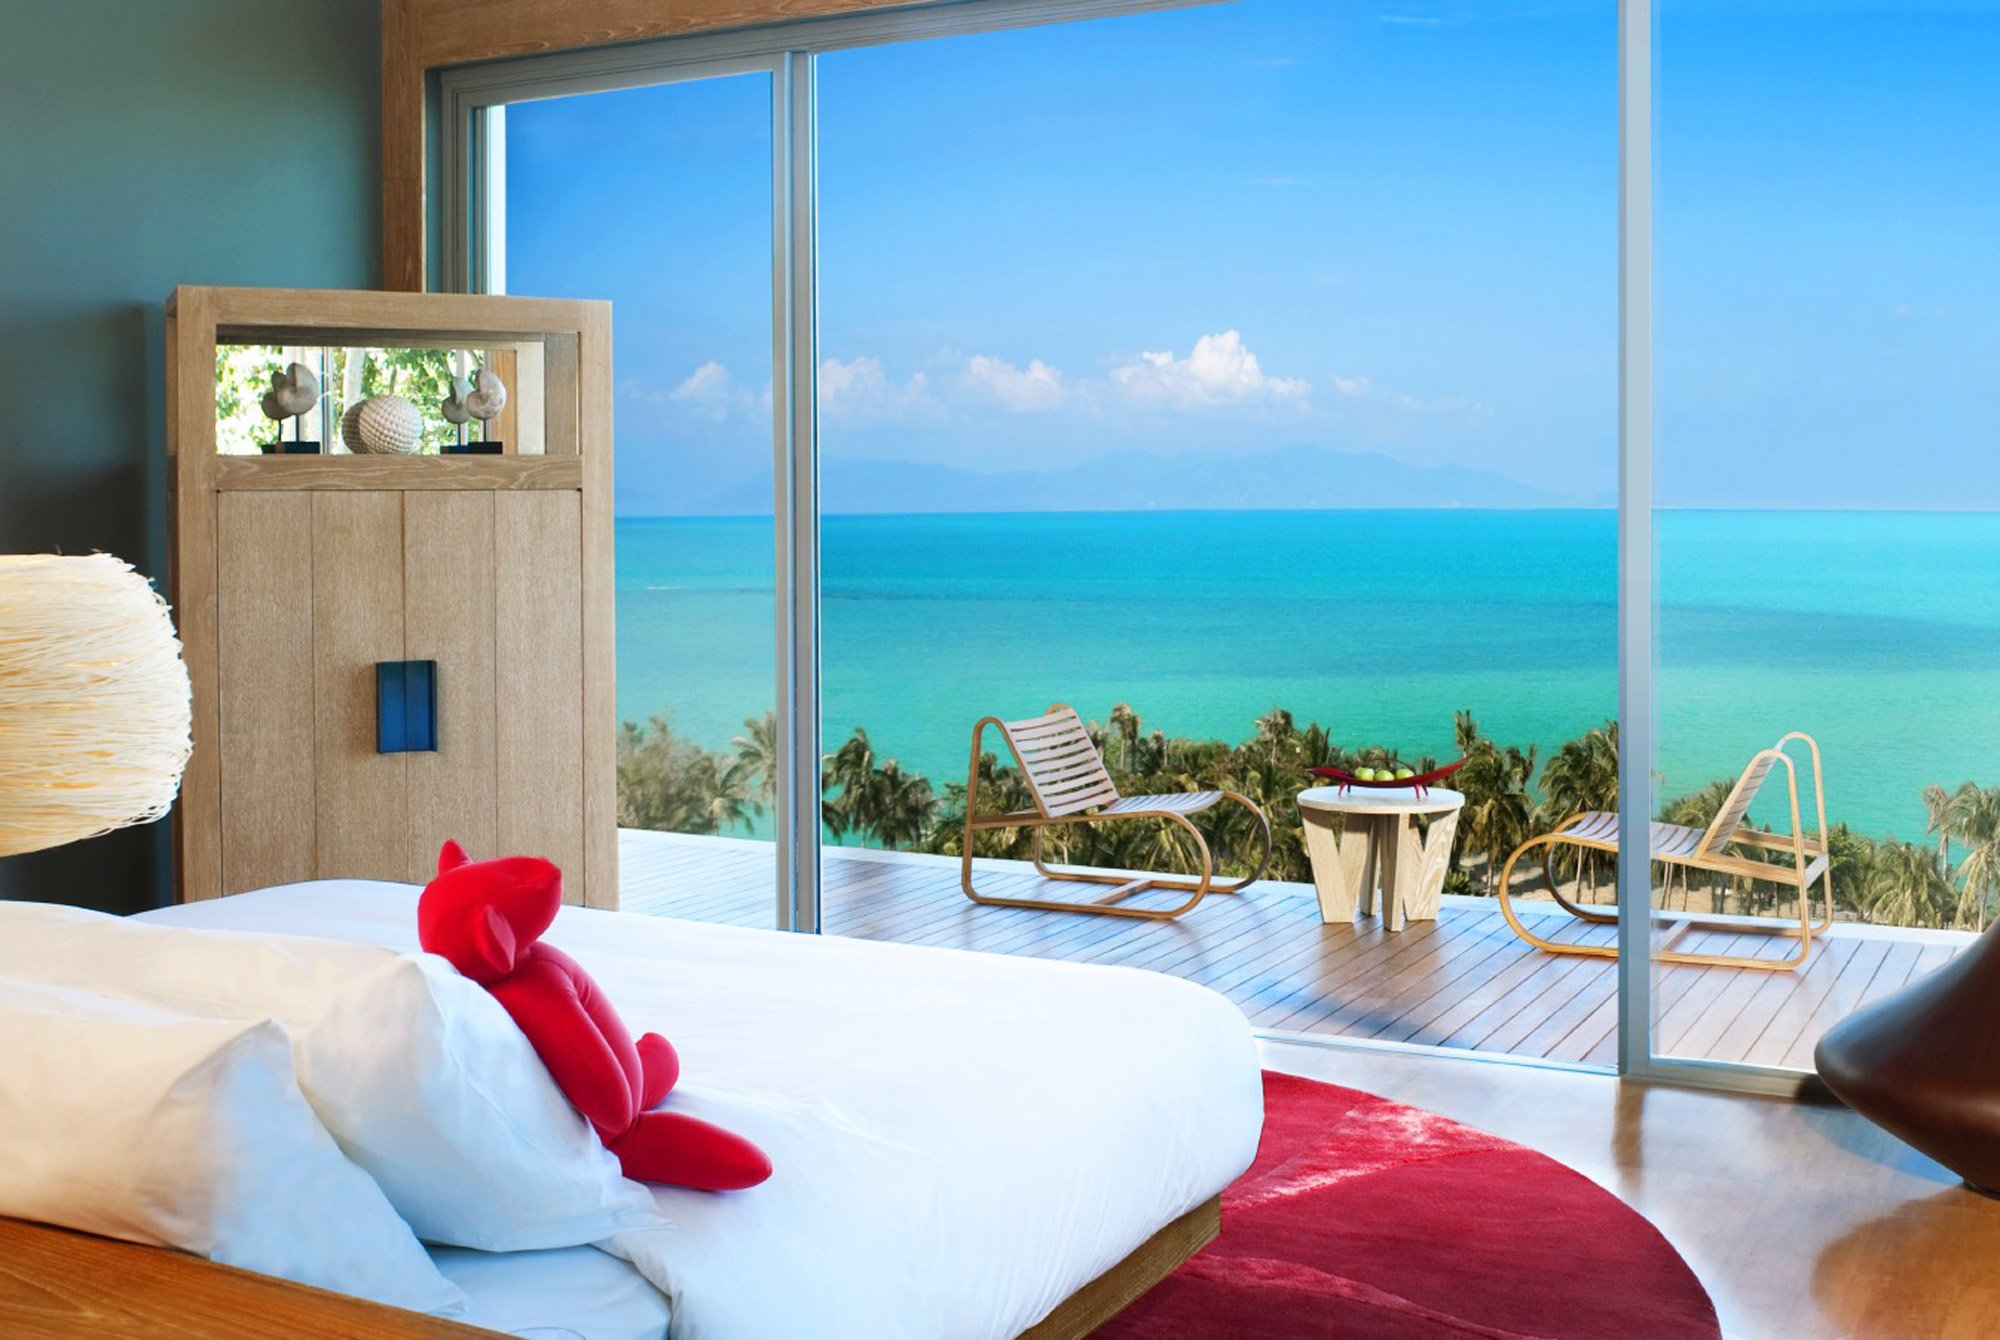 Отдых с видом на море. Спальня с видом на море. Спальня с видом на океан. Отель с видом на море. Вид из окна на океан.